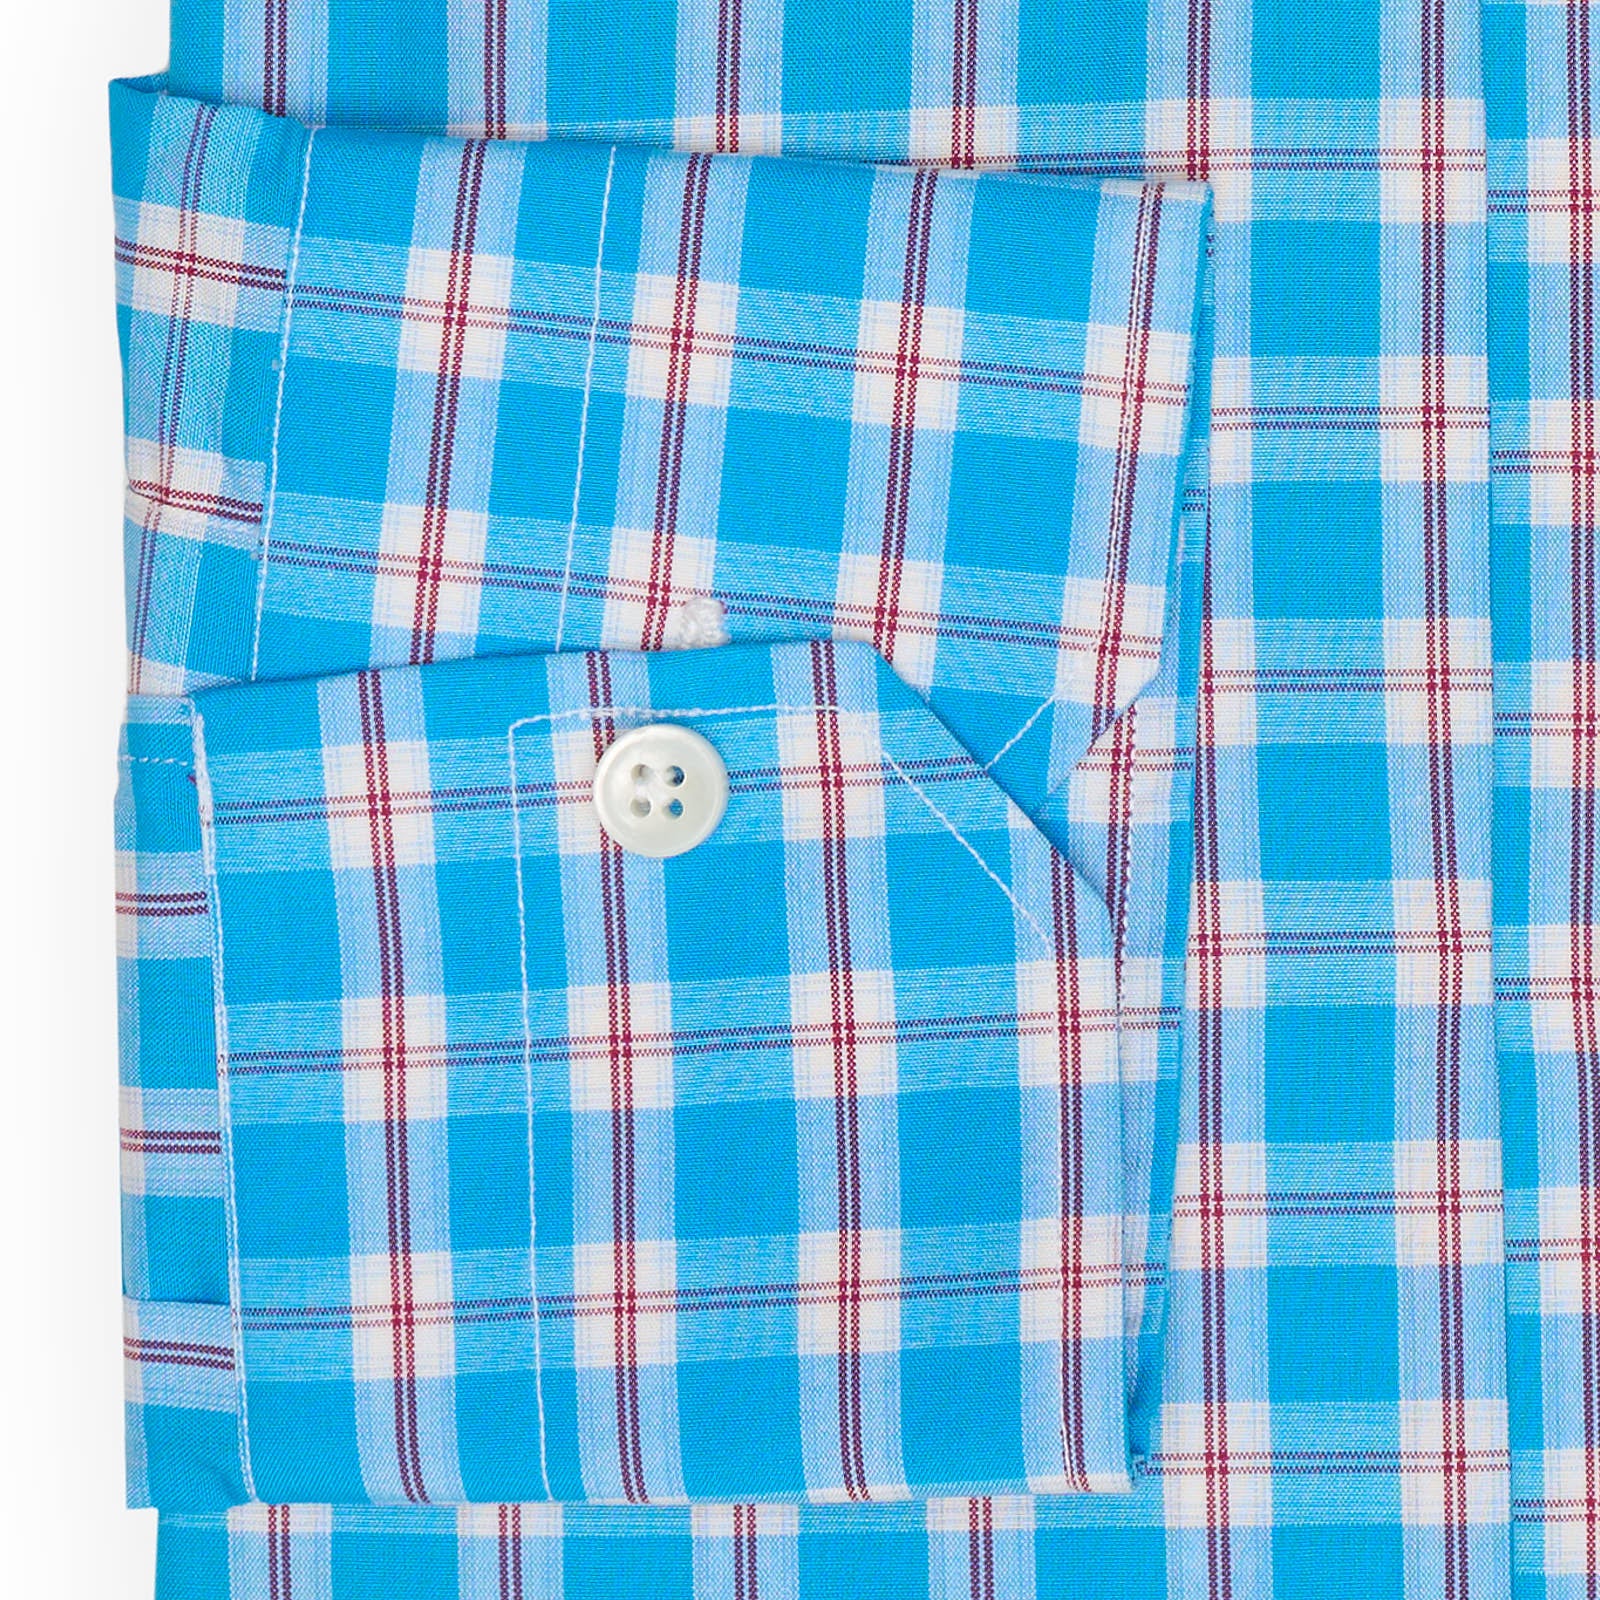 MATTABISCH for VANNUCCI Multicolor Plaid Cotton Dress Shirt EU 38 NEW US 15